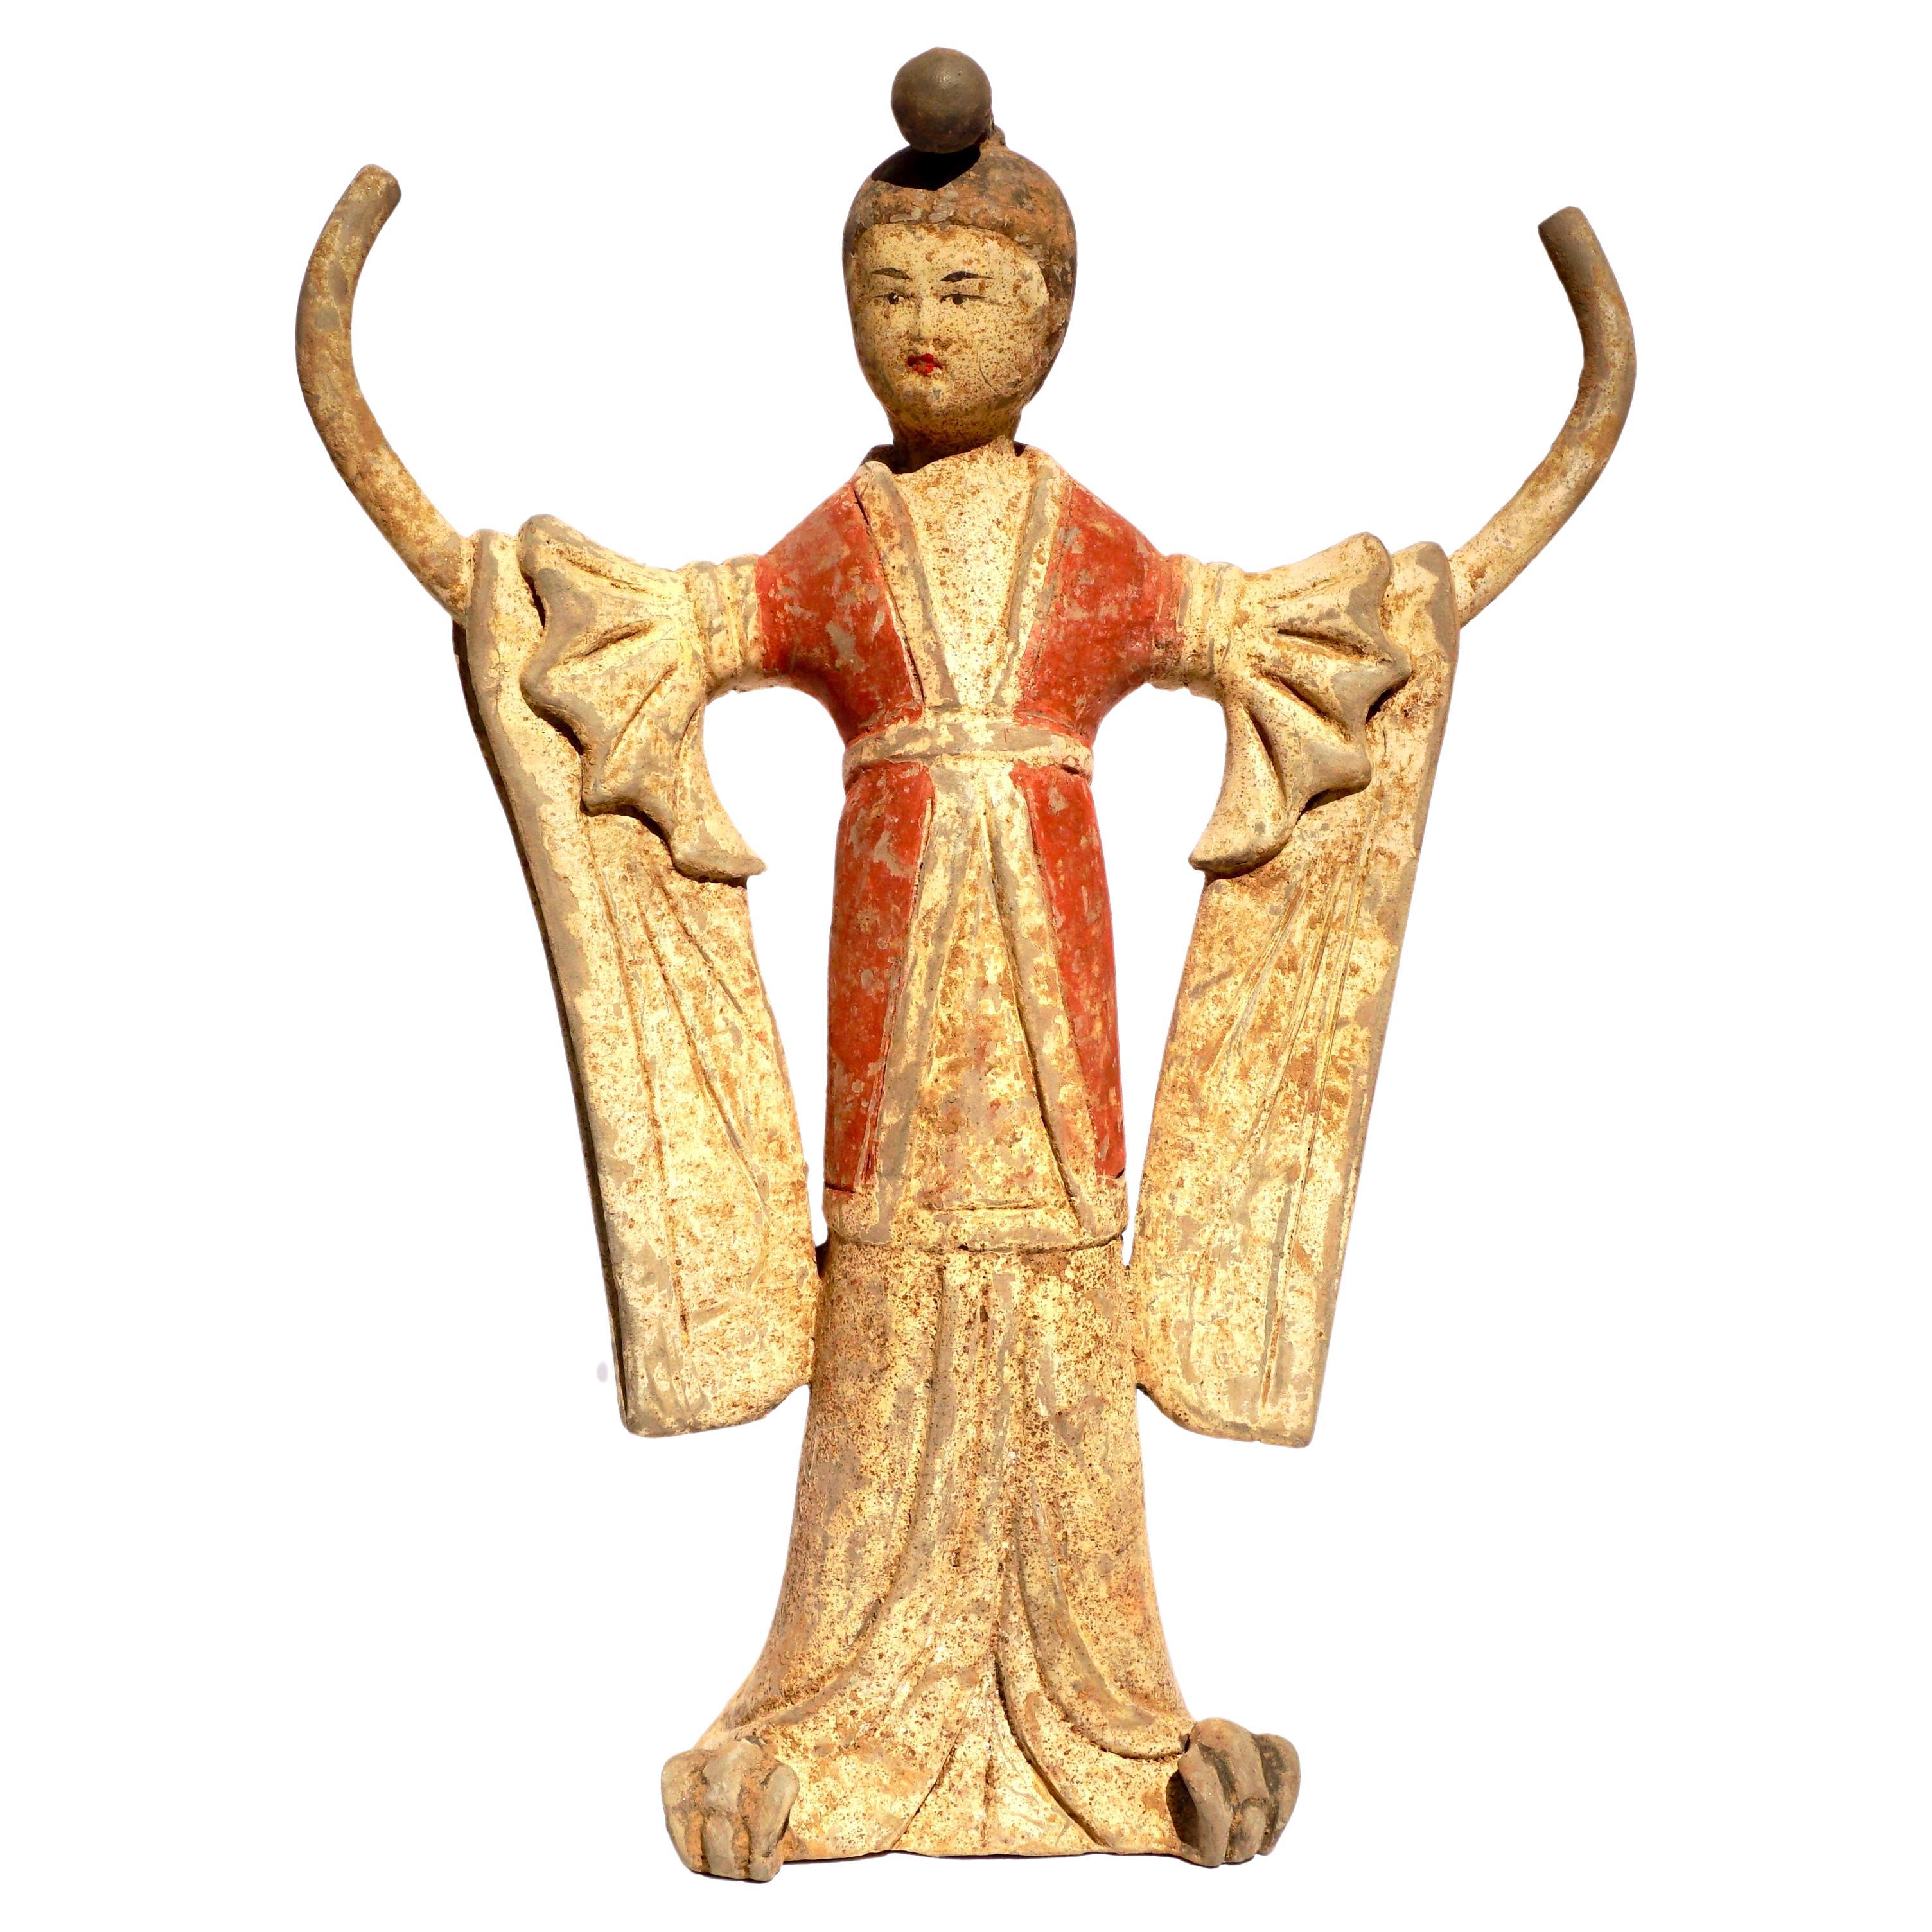 Danseuse en poterie peinte de la dynastie Tang, testée TL